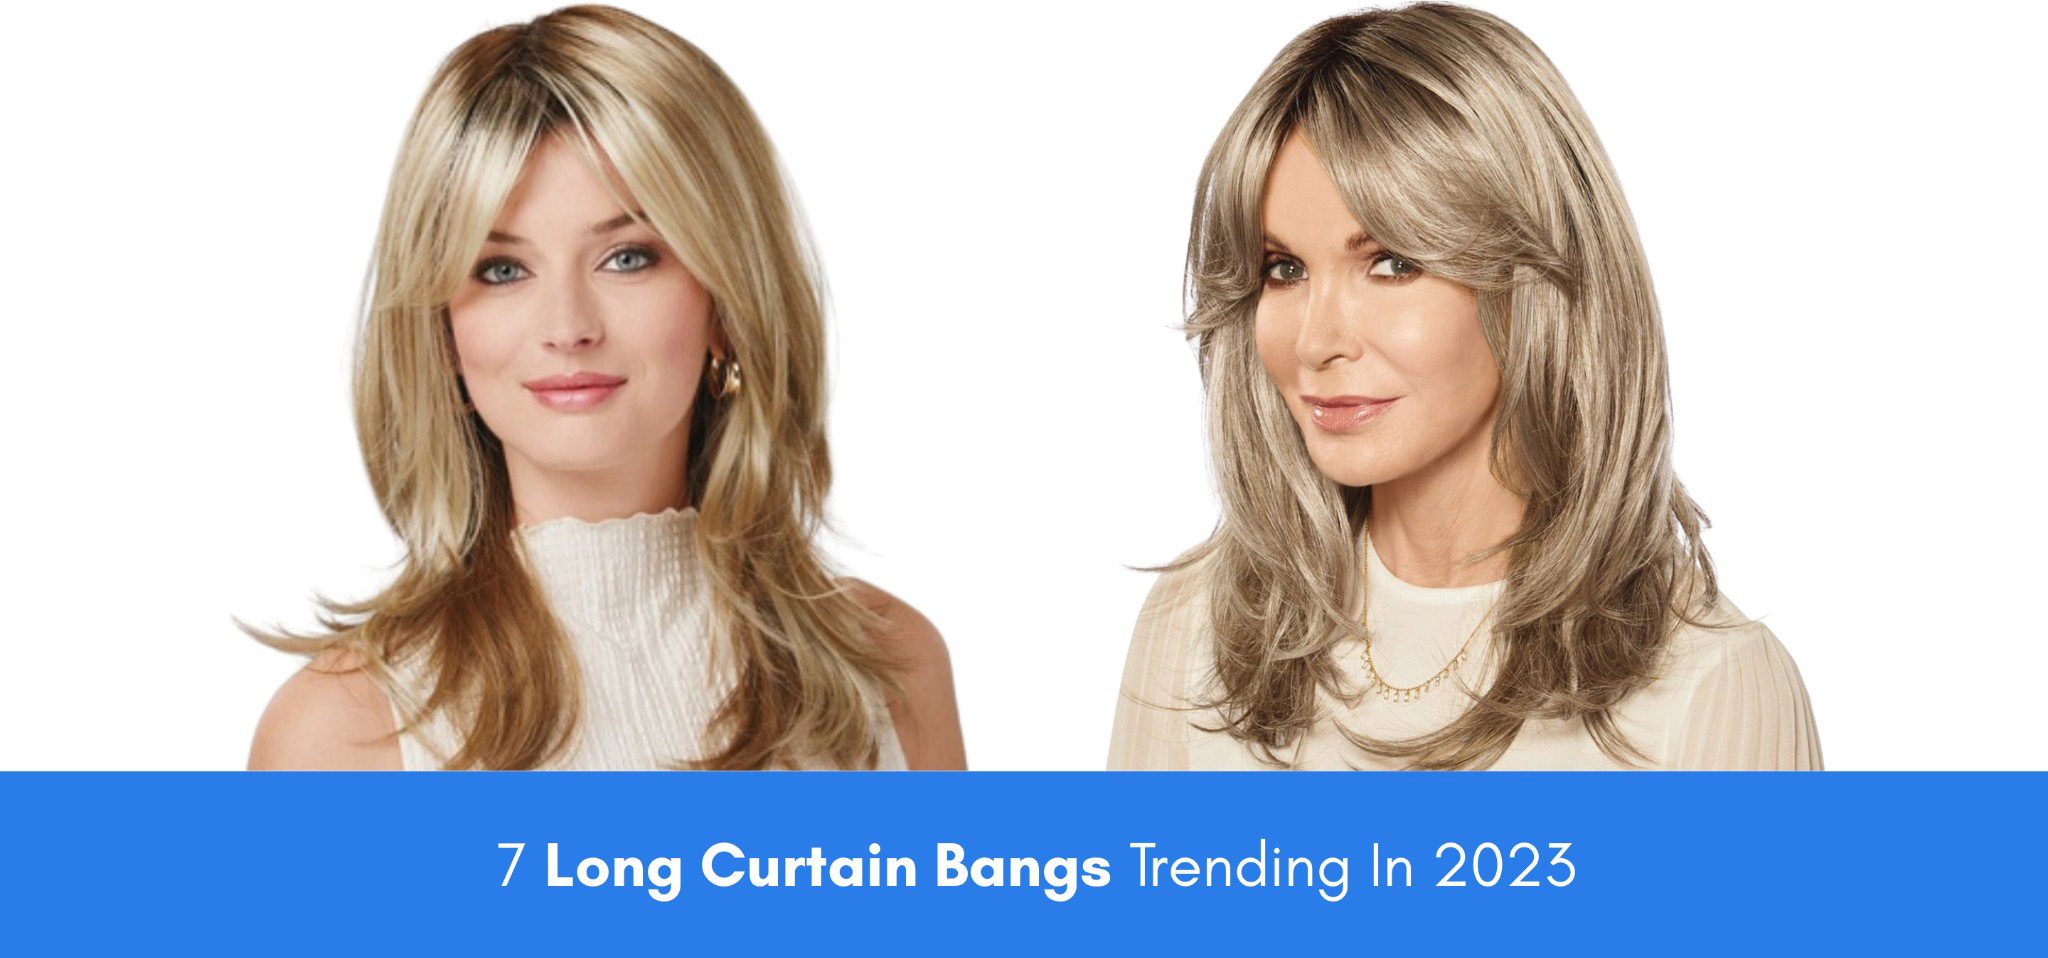 7 Long Curtain Bangs Trending In 2023